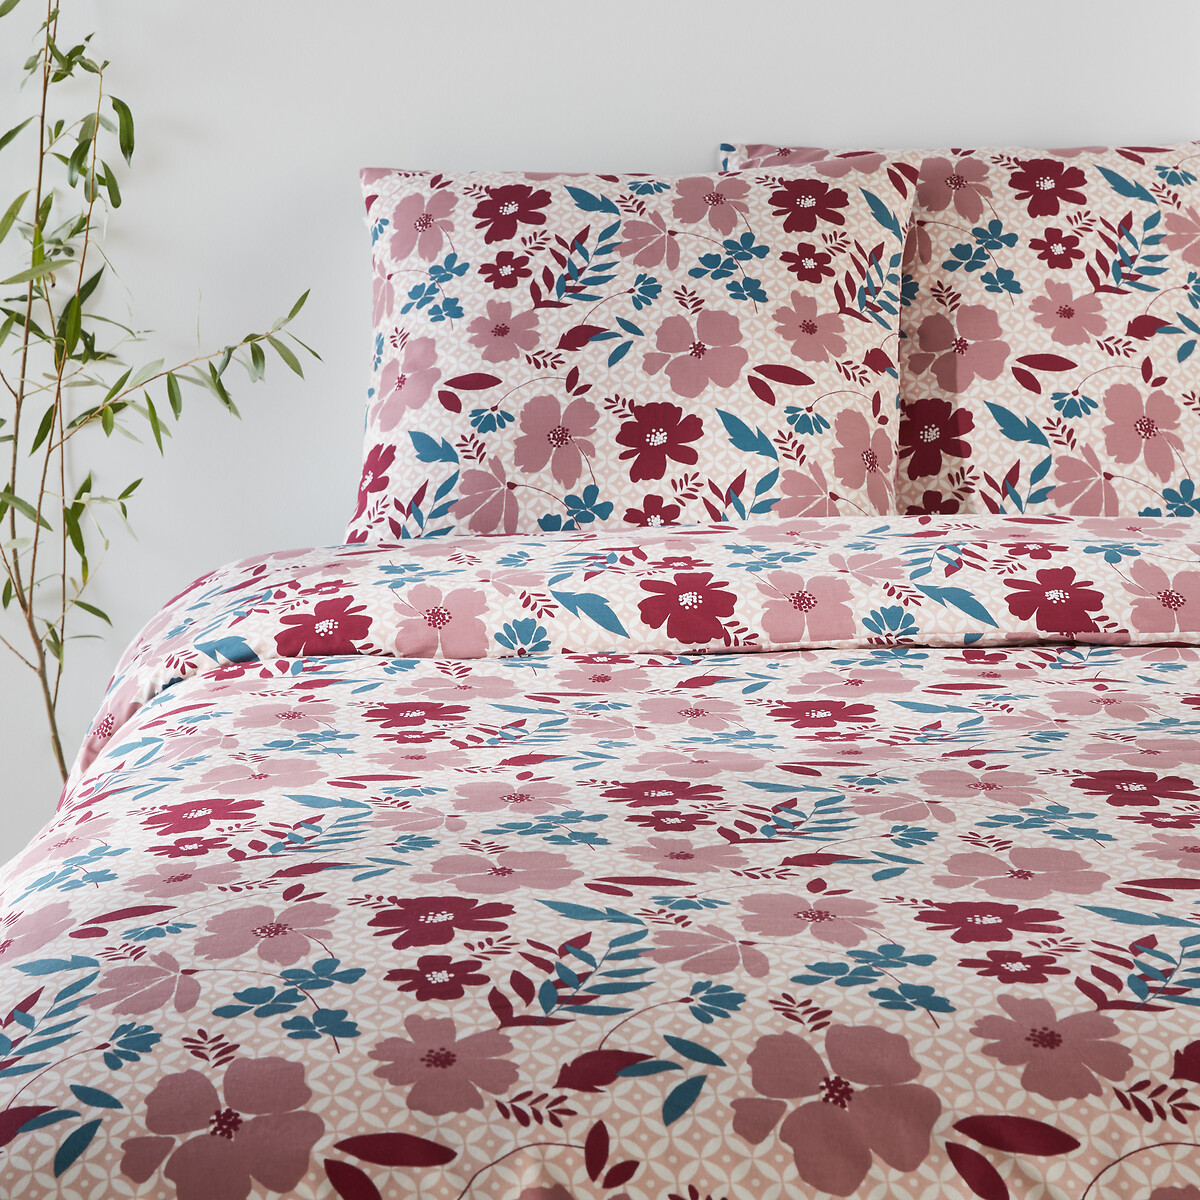 Beki Floral 100% Cotton Bedding Set with Square Pillowcases